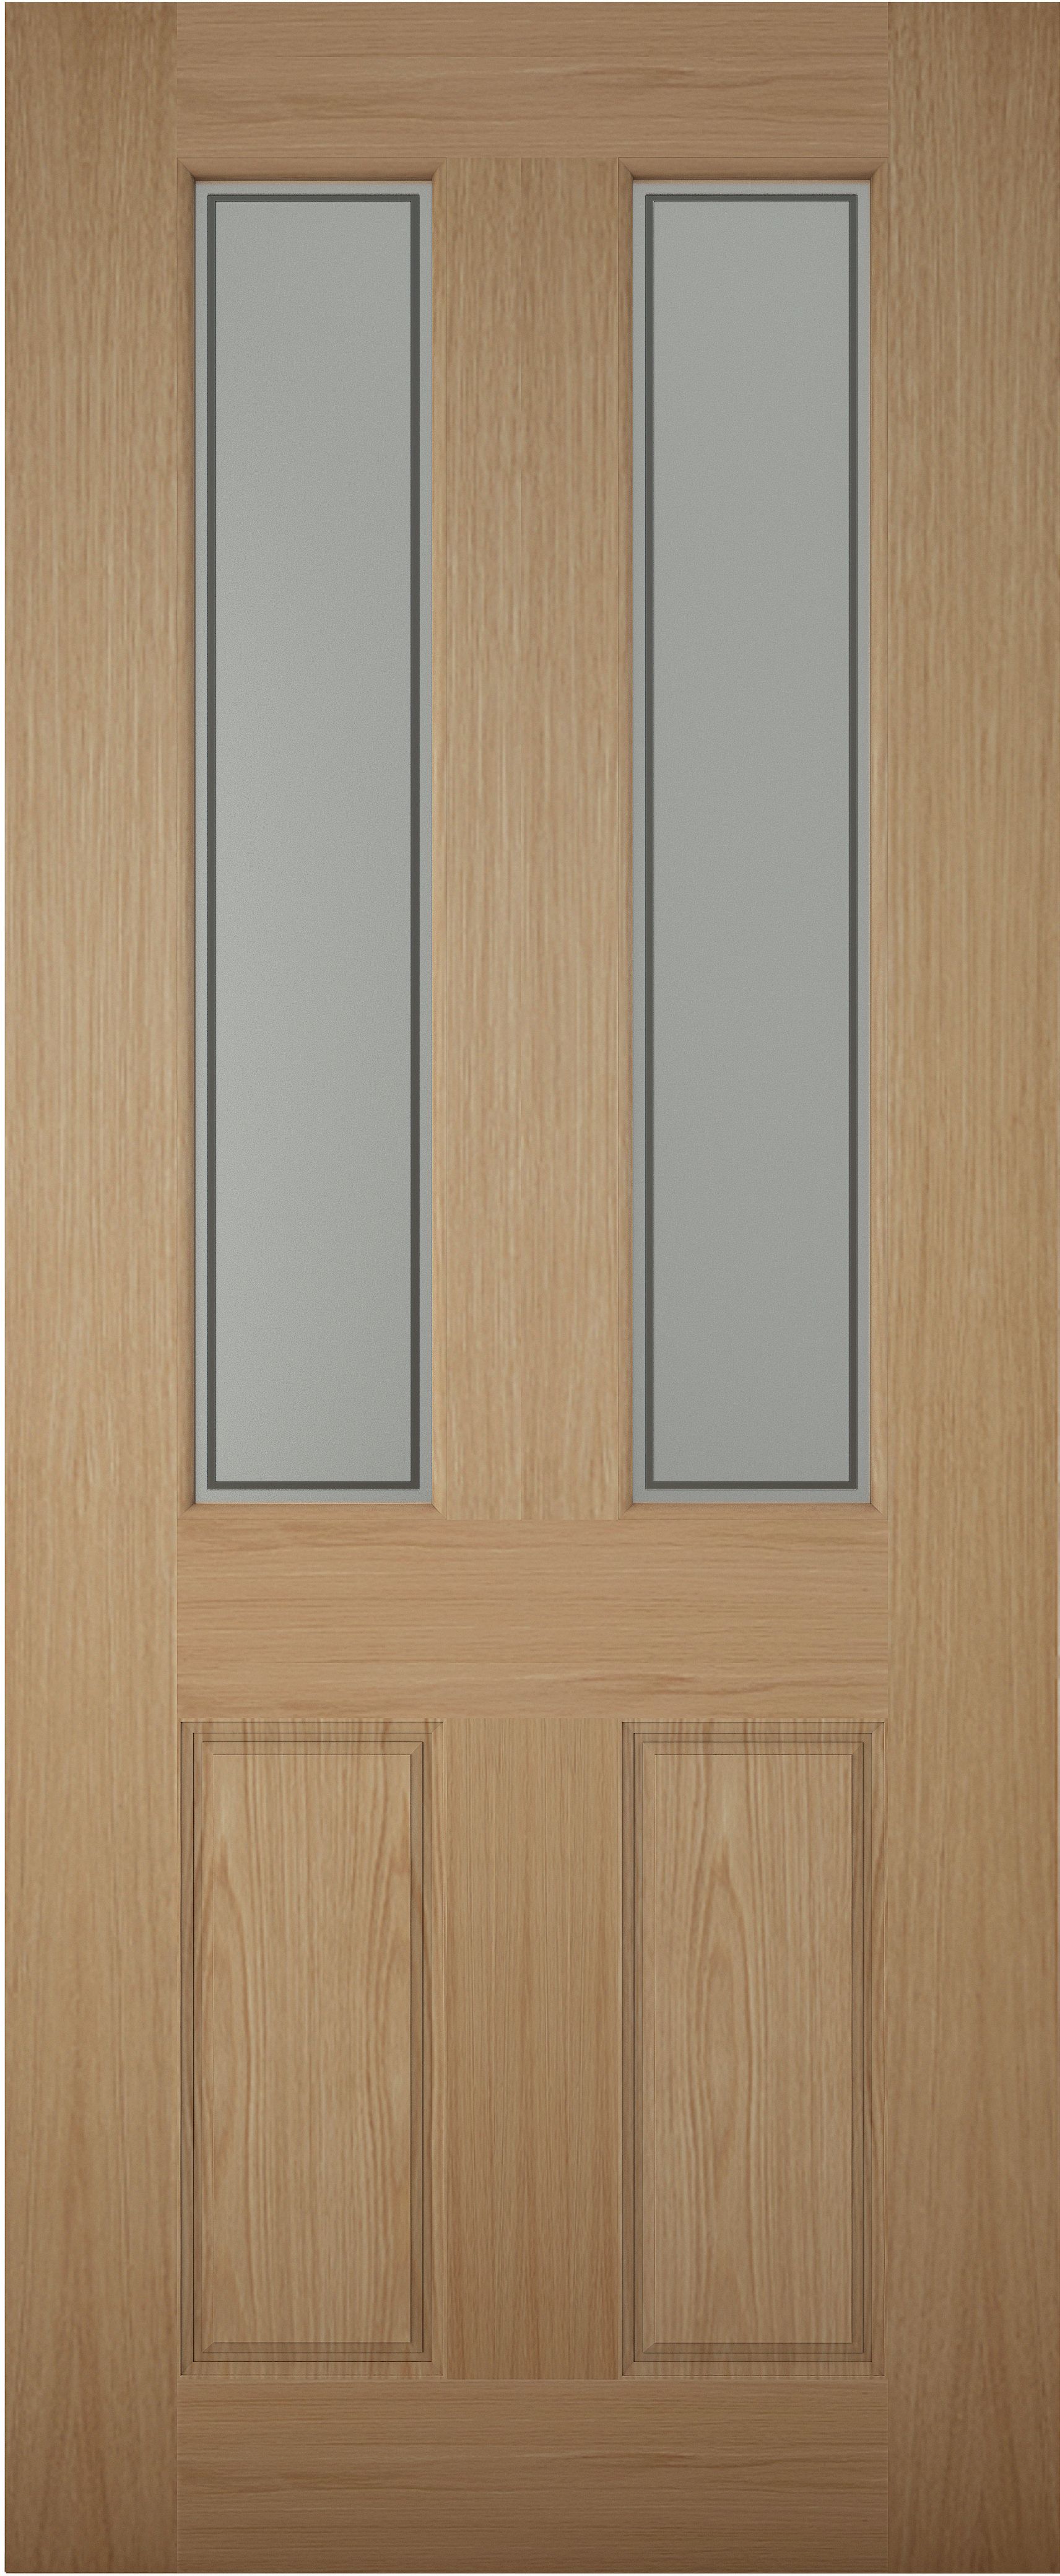 4 panel Frosted Glazed Wooden White oak veneer External Front door, (H)1981mm (W)838mm